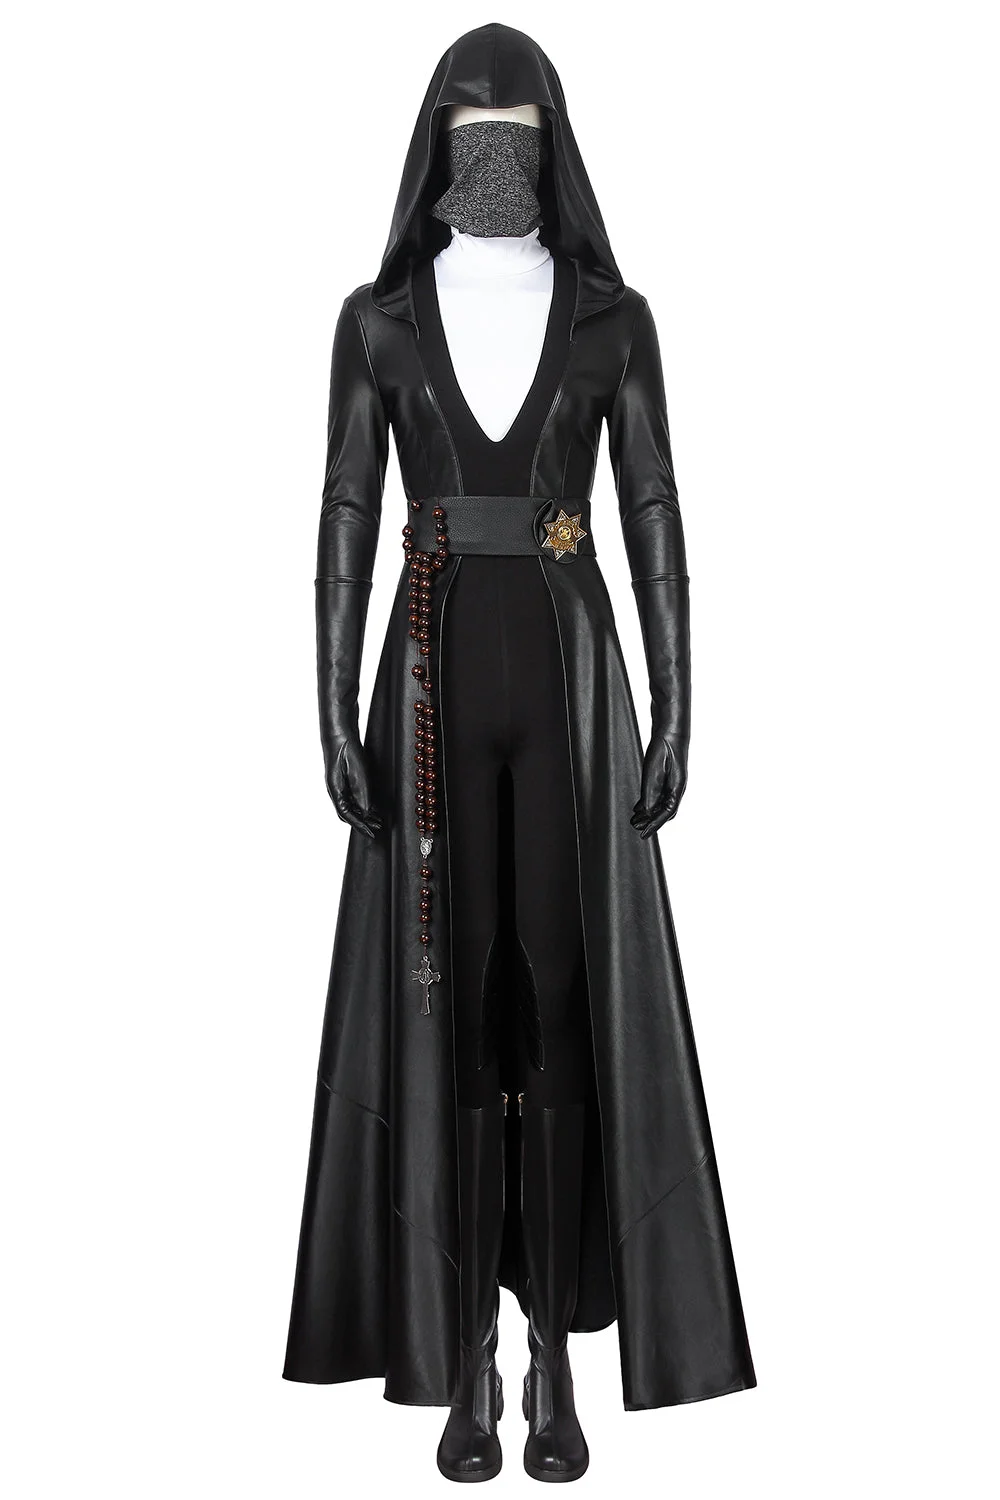 Sister Night Cosplay Costume Watchmen Season 1 Angela Abar Suit